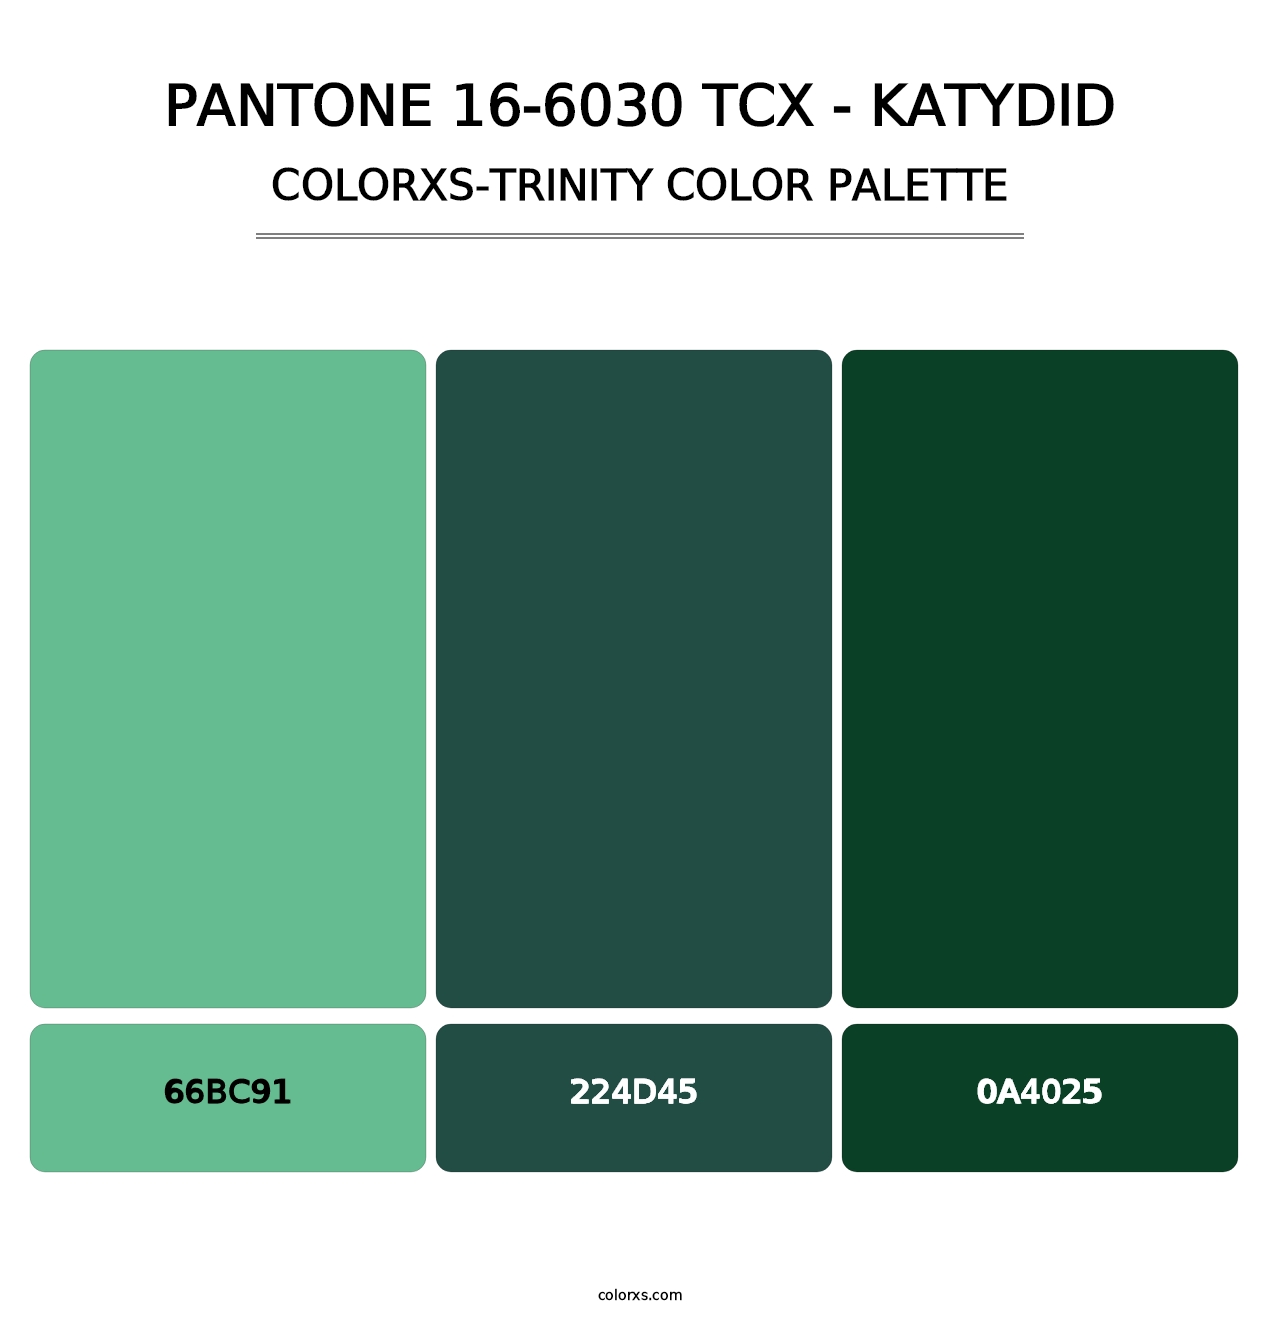 PANTONE 16-6030 TCX - Katydid - Colorxs Trinity Palette